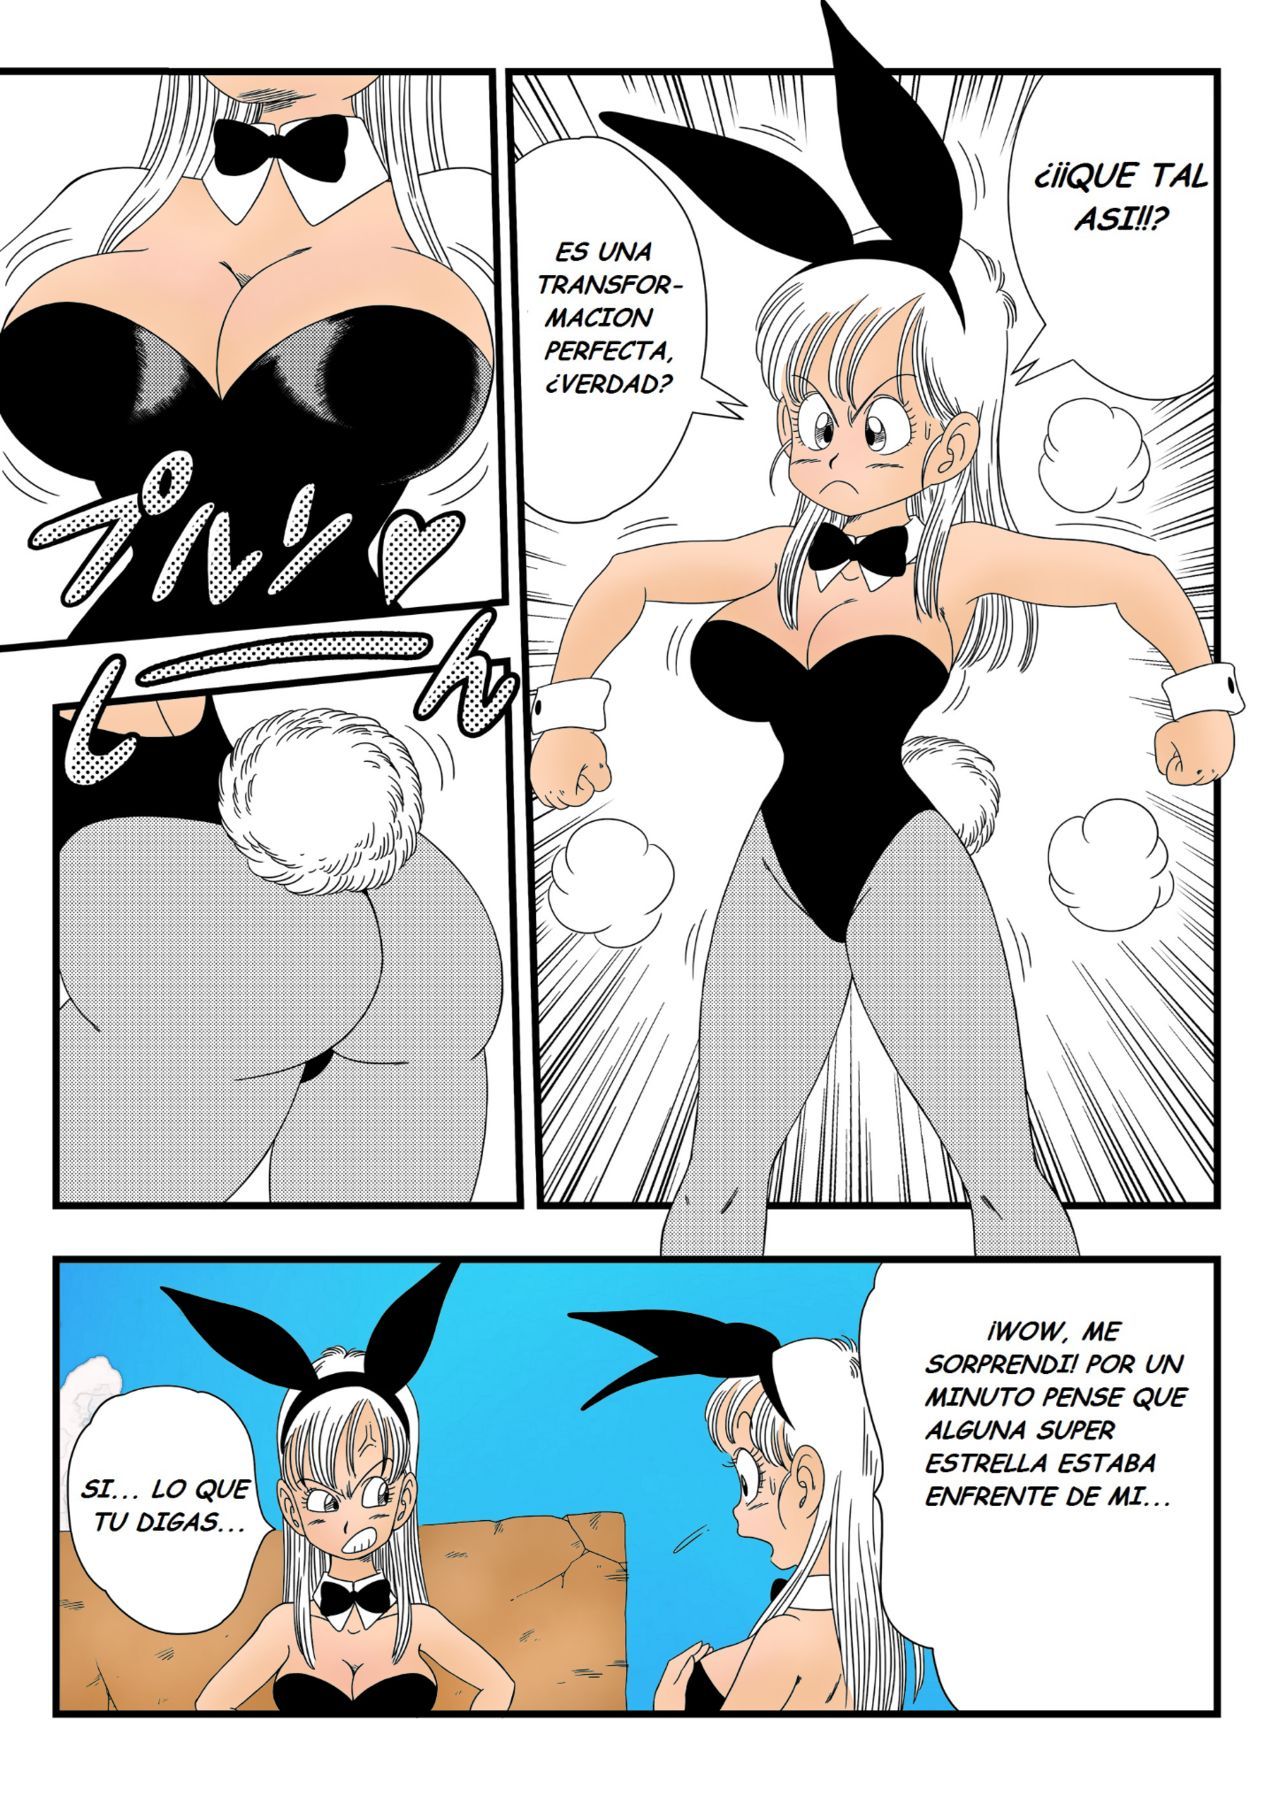 Bunny-Girl-Transformation-05.jpg